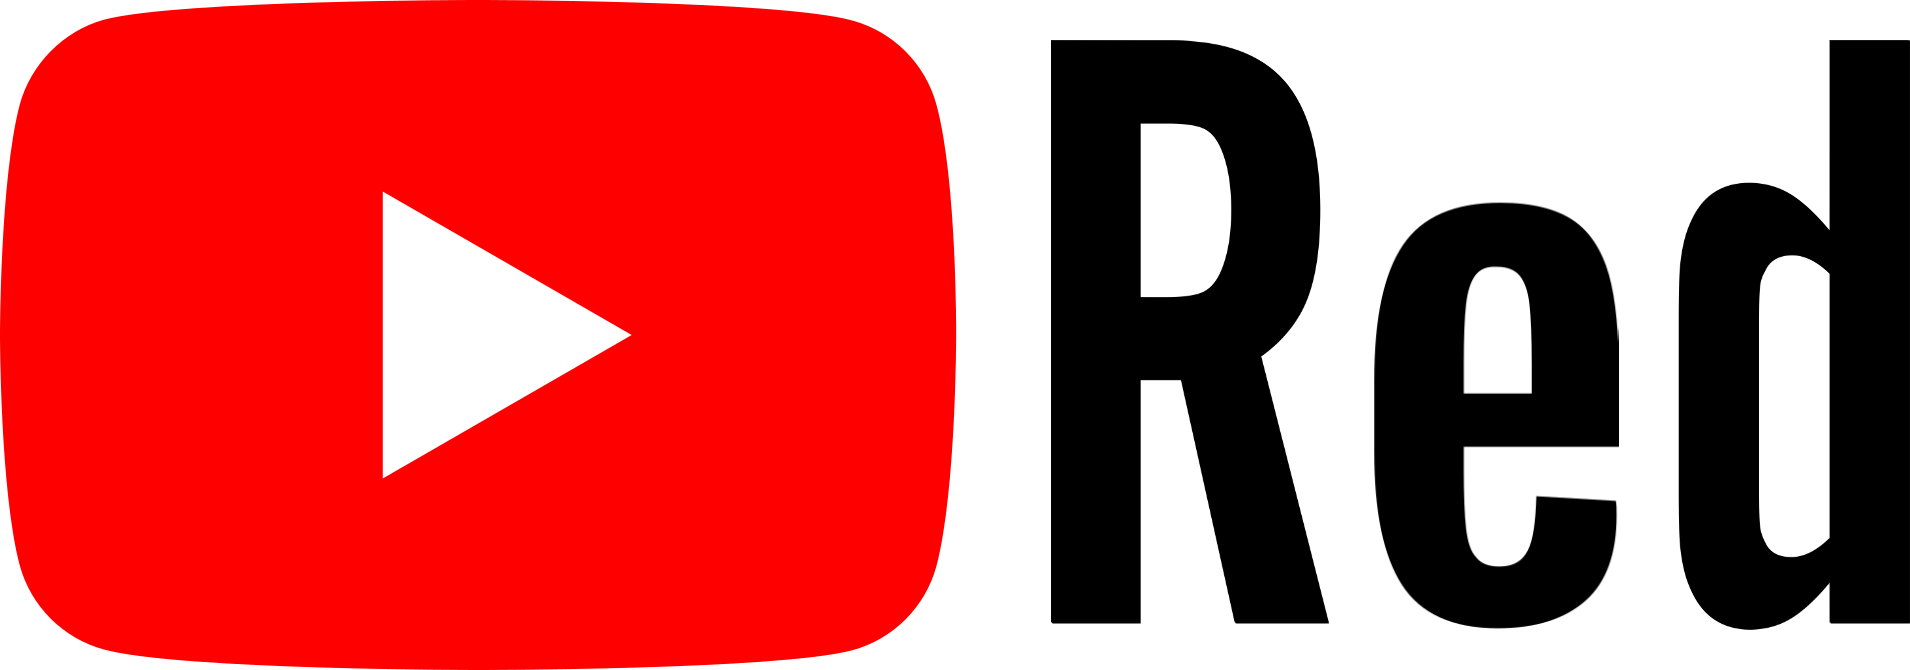 Image red logo logopedia. Youtube images png